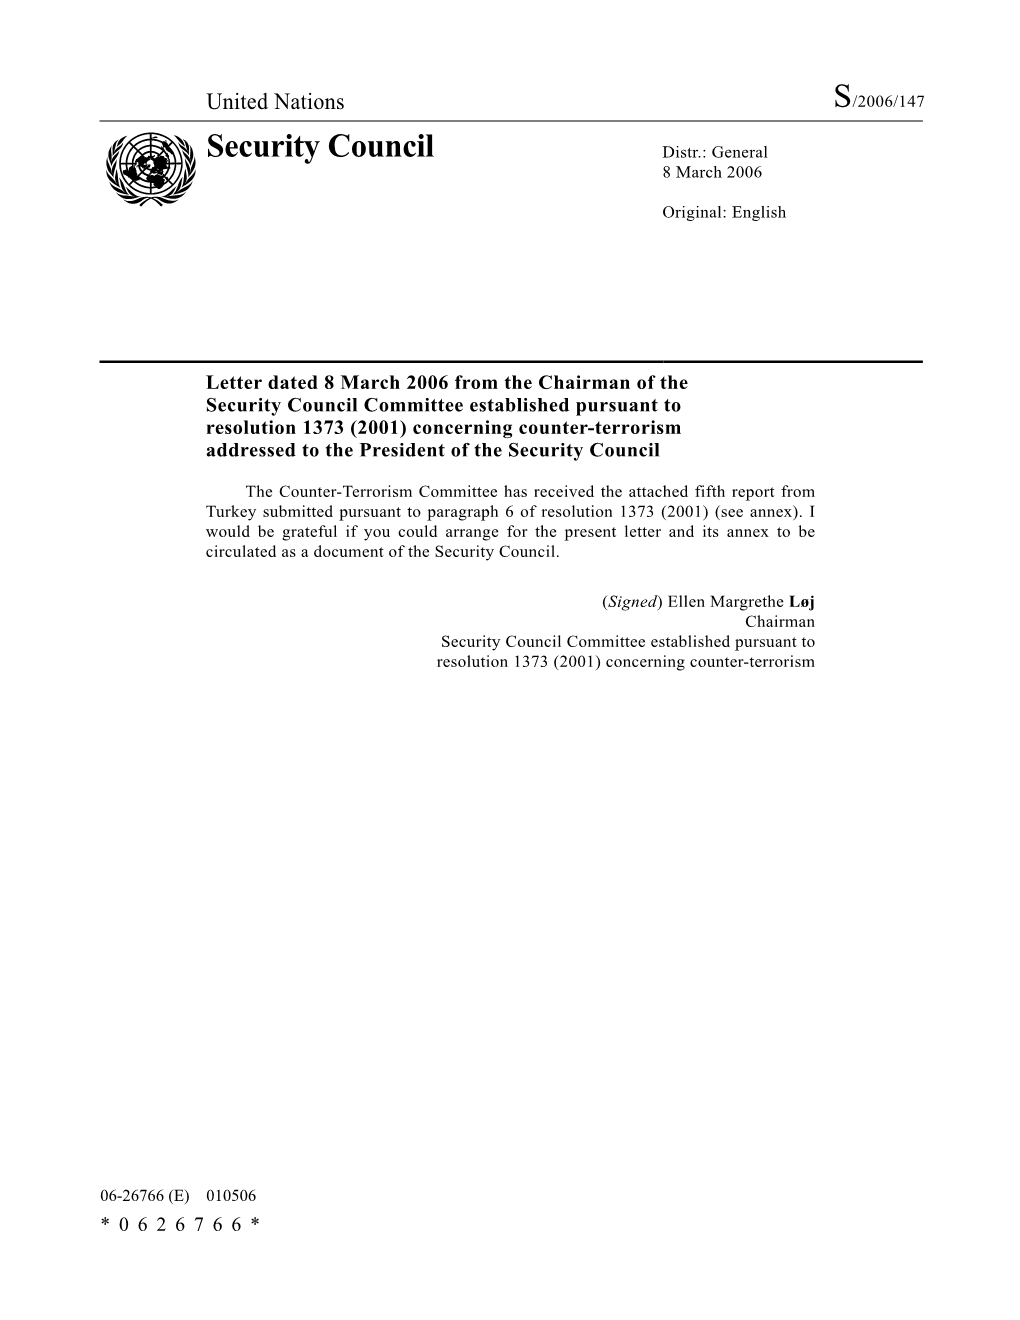 Security Council Distr.: General 8 March 2006